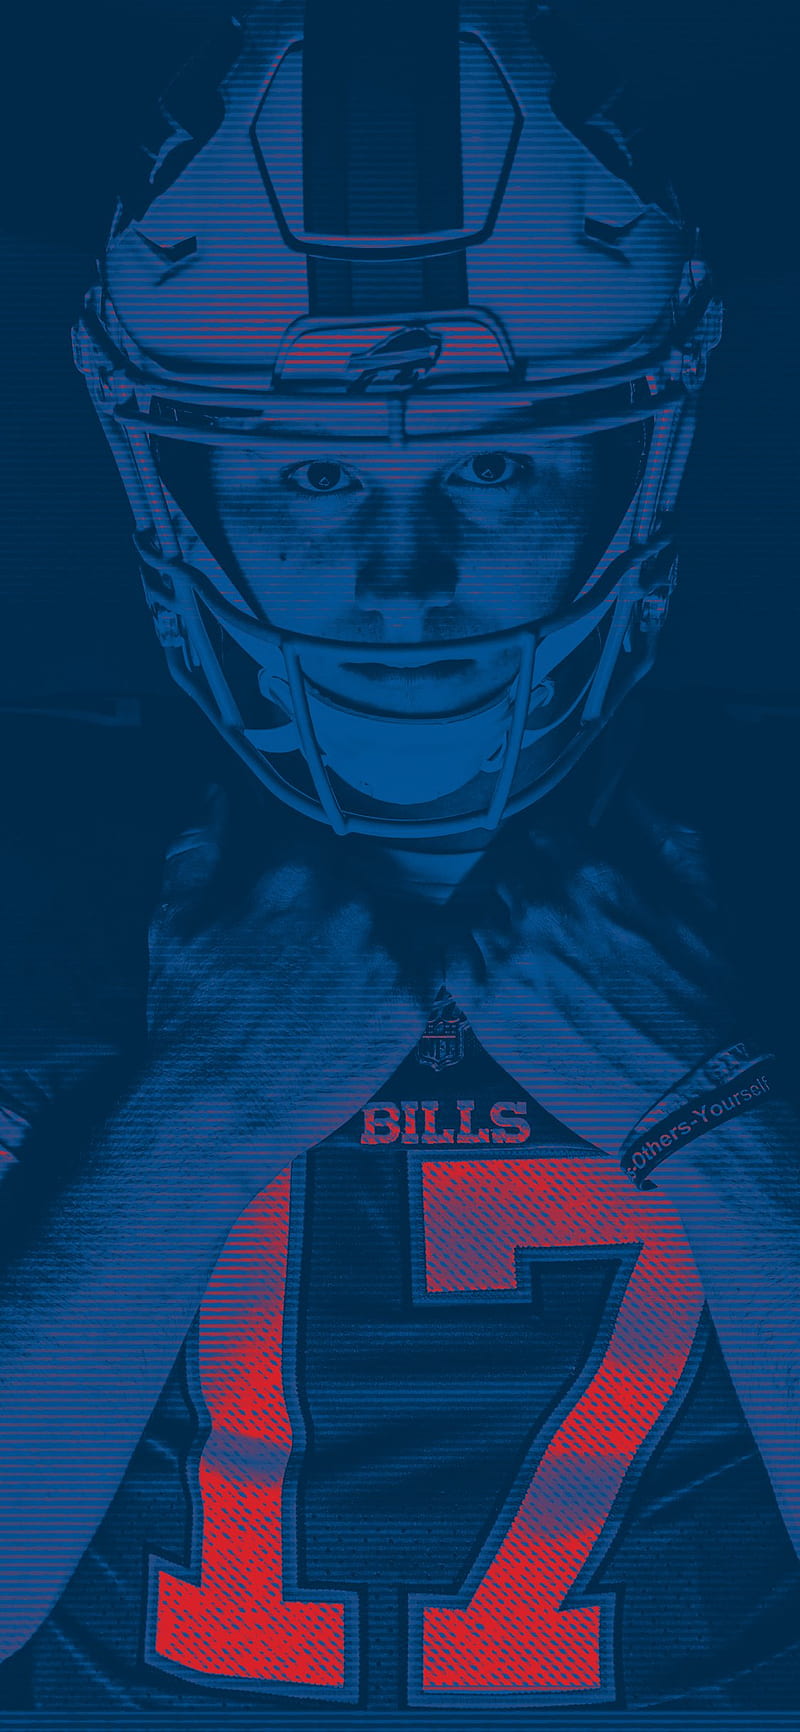 Jordan Santalucia on Twitter Buffalo Bills Playoffs 2019 iPhone X  wallpapers ChampionshipCaliber GoBills httpstcotISYMBMIvw  Twitter